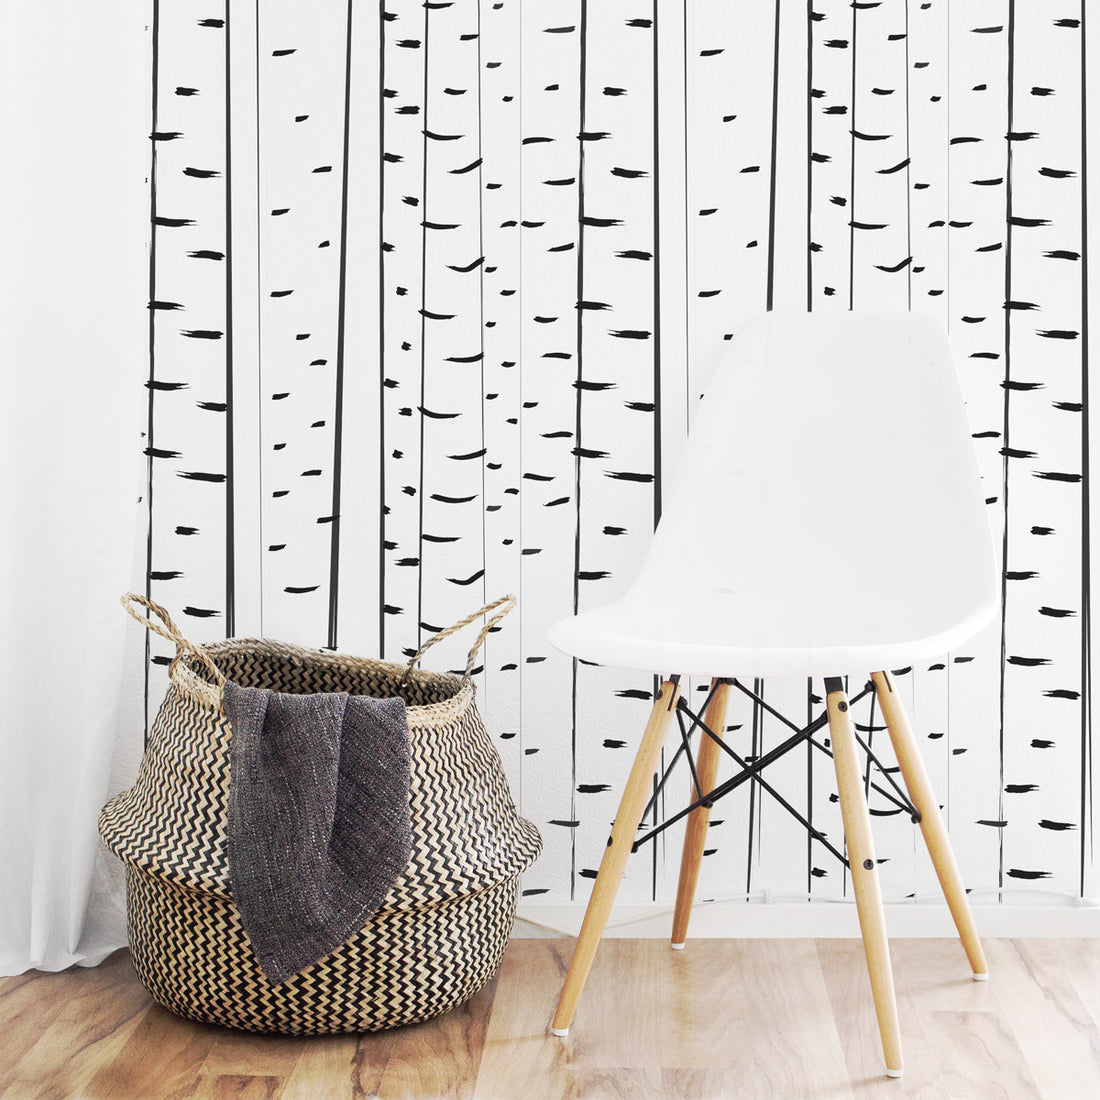 Modern birch tree removable wallpaper in scandinavian kid's room interior